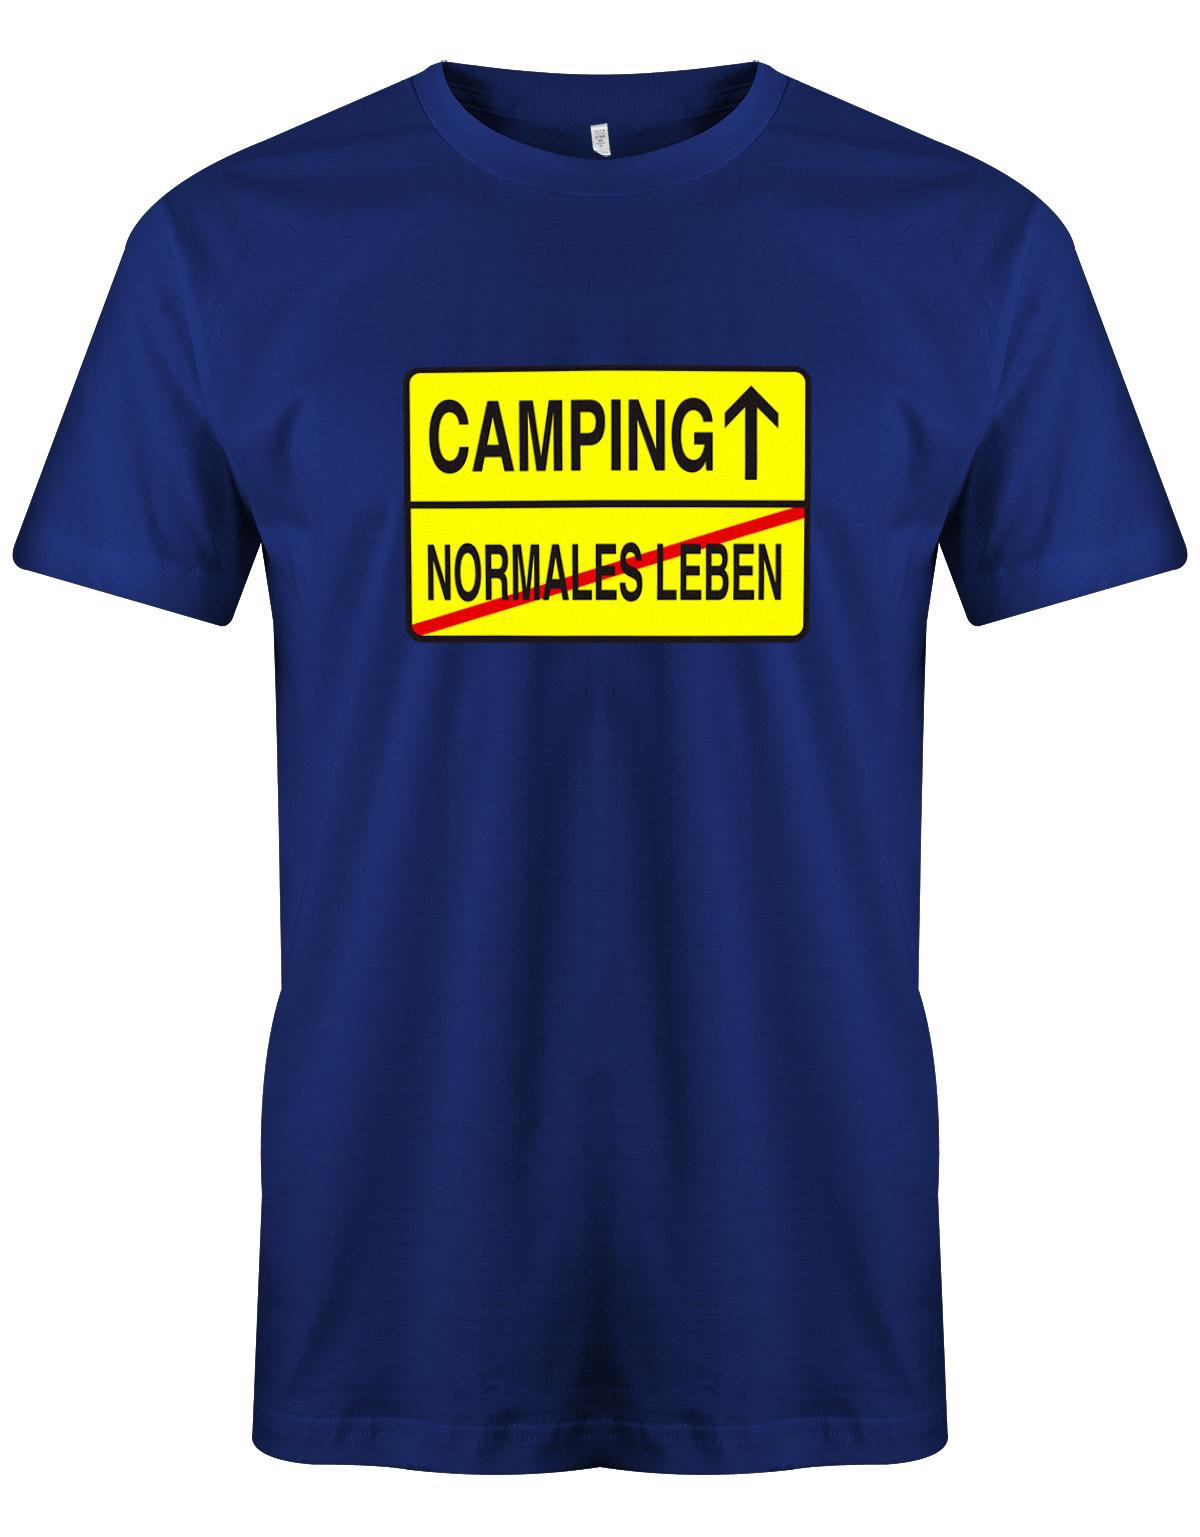 Camping-Normales-leben-Ortschild-herren-Camping-Shirt-Royalblau